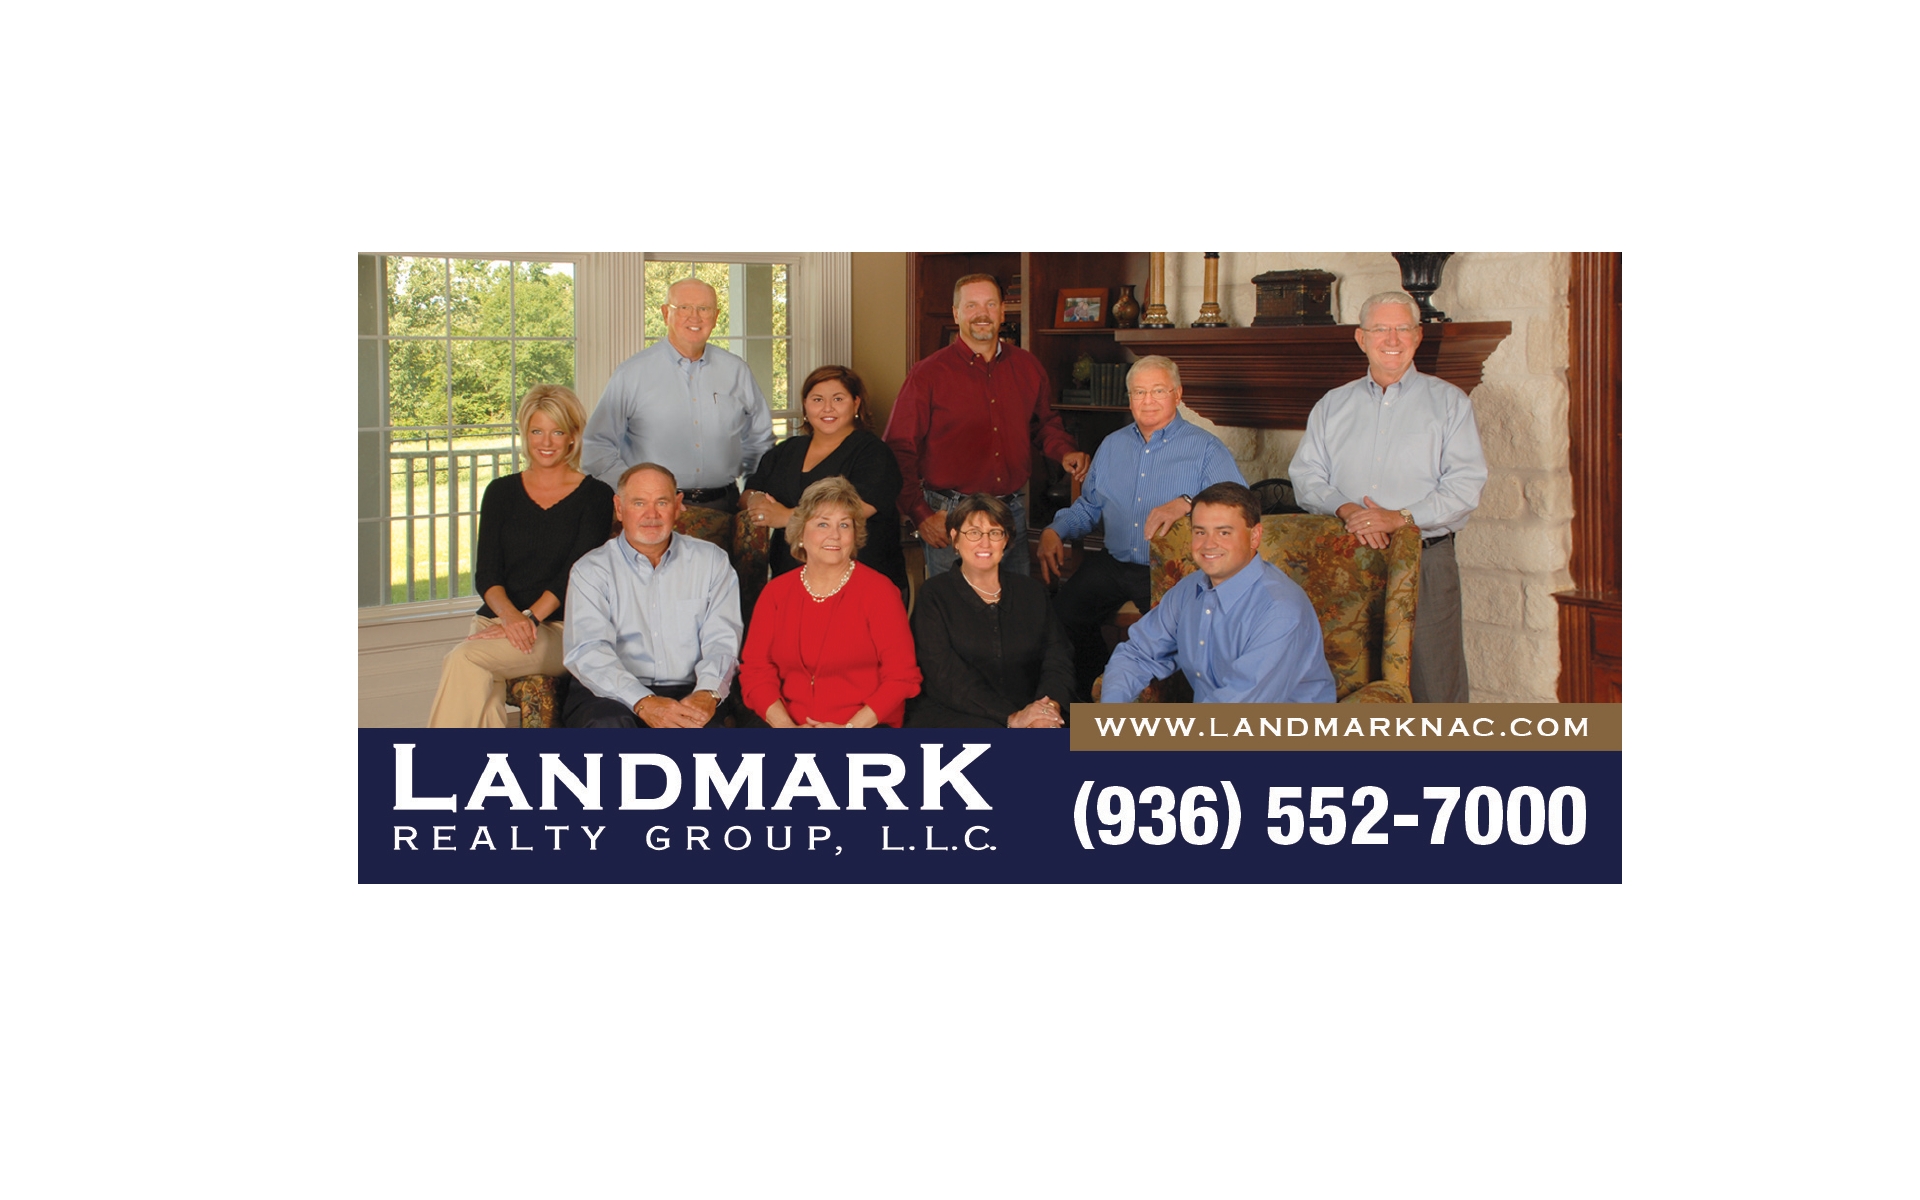 LANDMARK REALTY GROUP BILLBOARD landmarknac.com